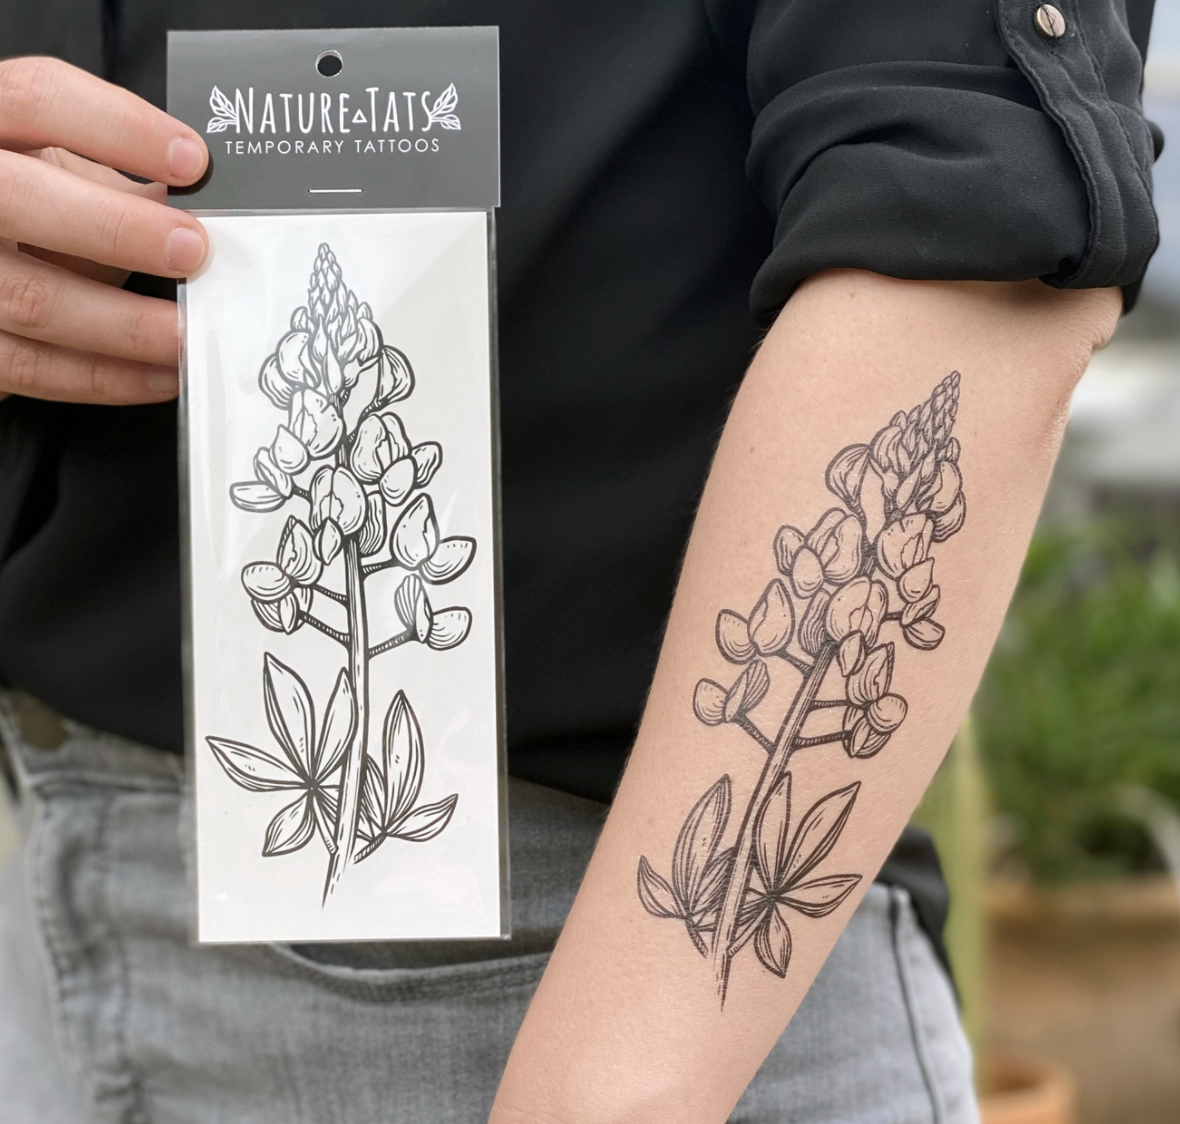 Nature Tats - Temporary Tattoos